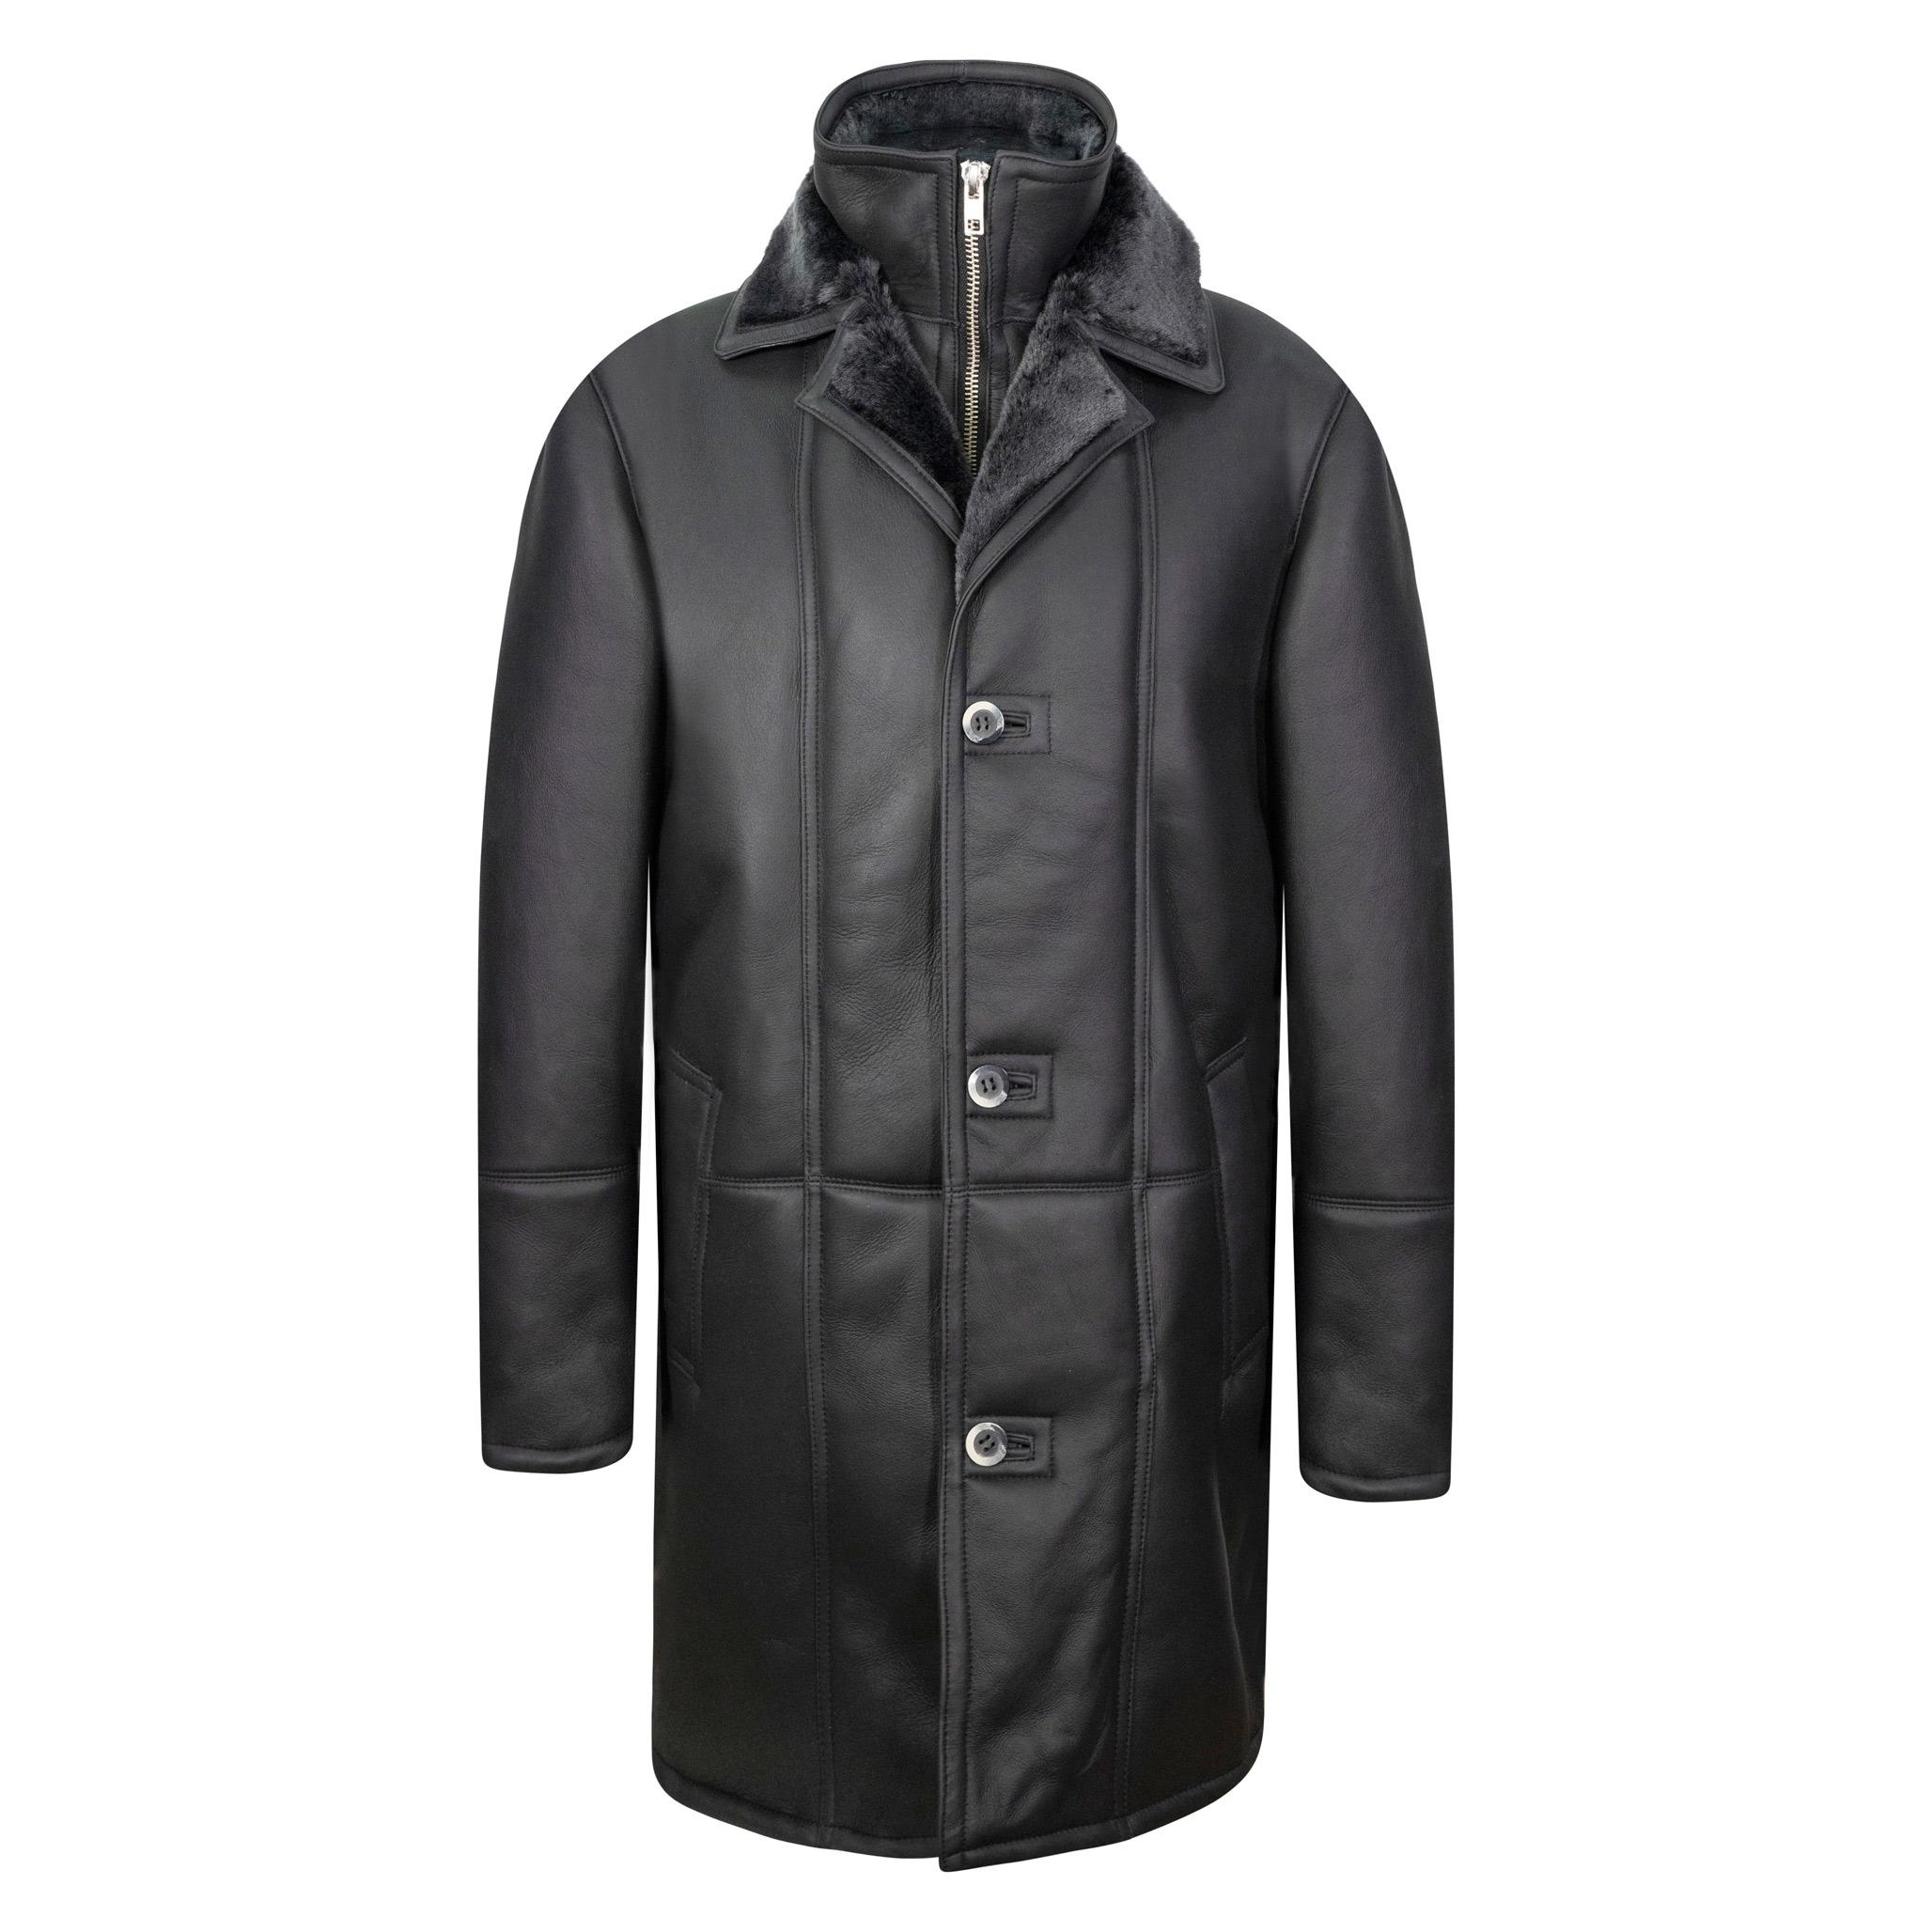 A beautiful mens 3/4 length sheepskin coat in black